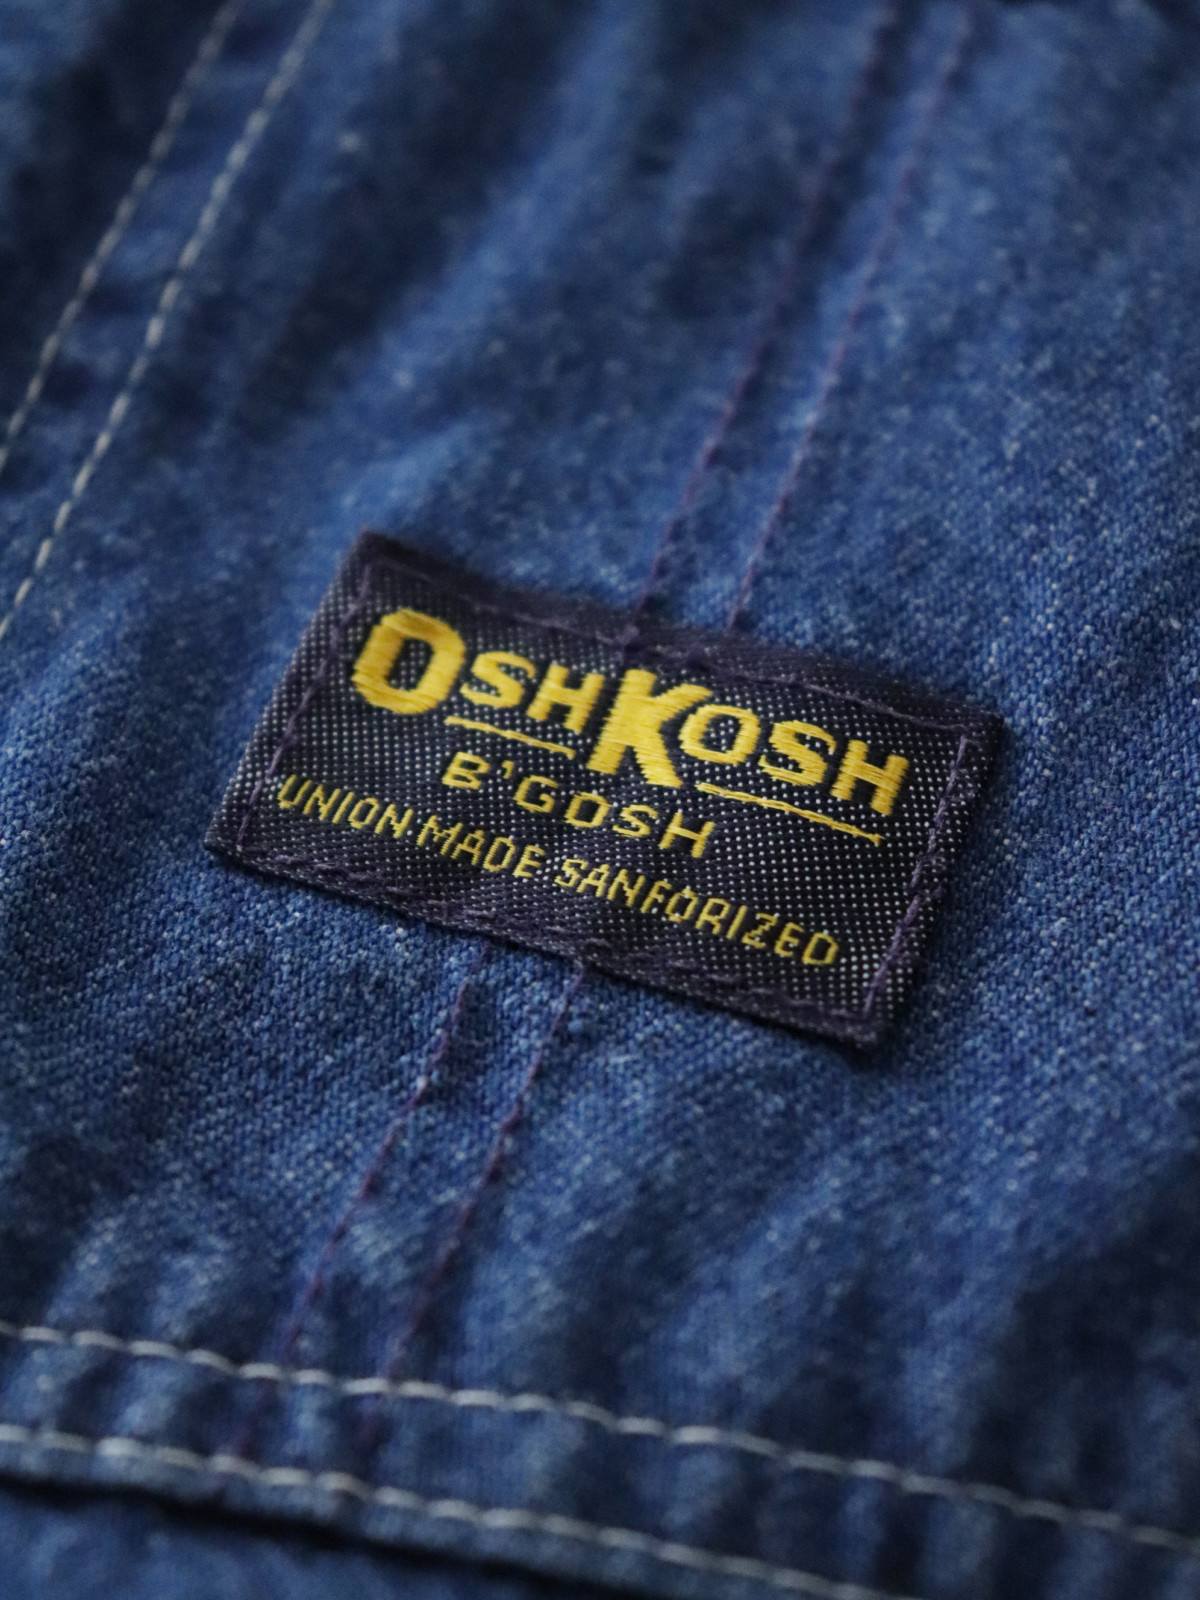 Osh Kosh B'gosh,denim overalls,USA